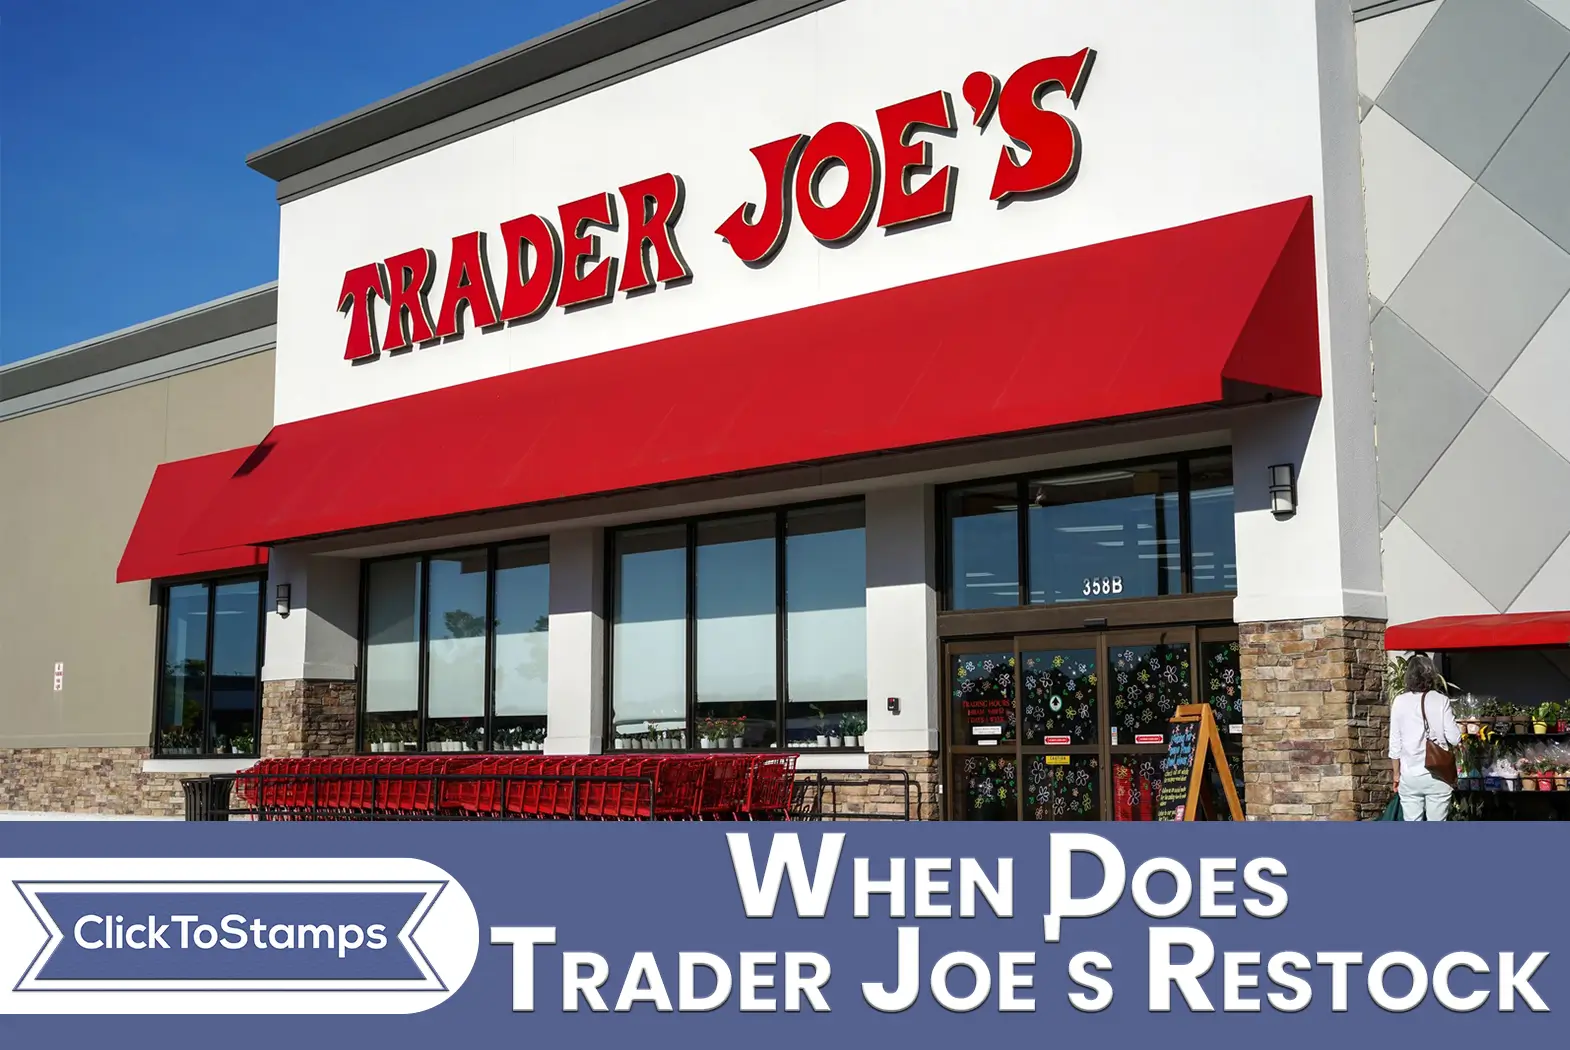 When Does Trader Joe's Restock